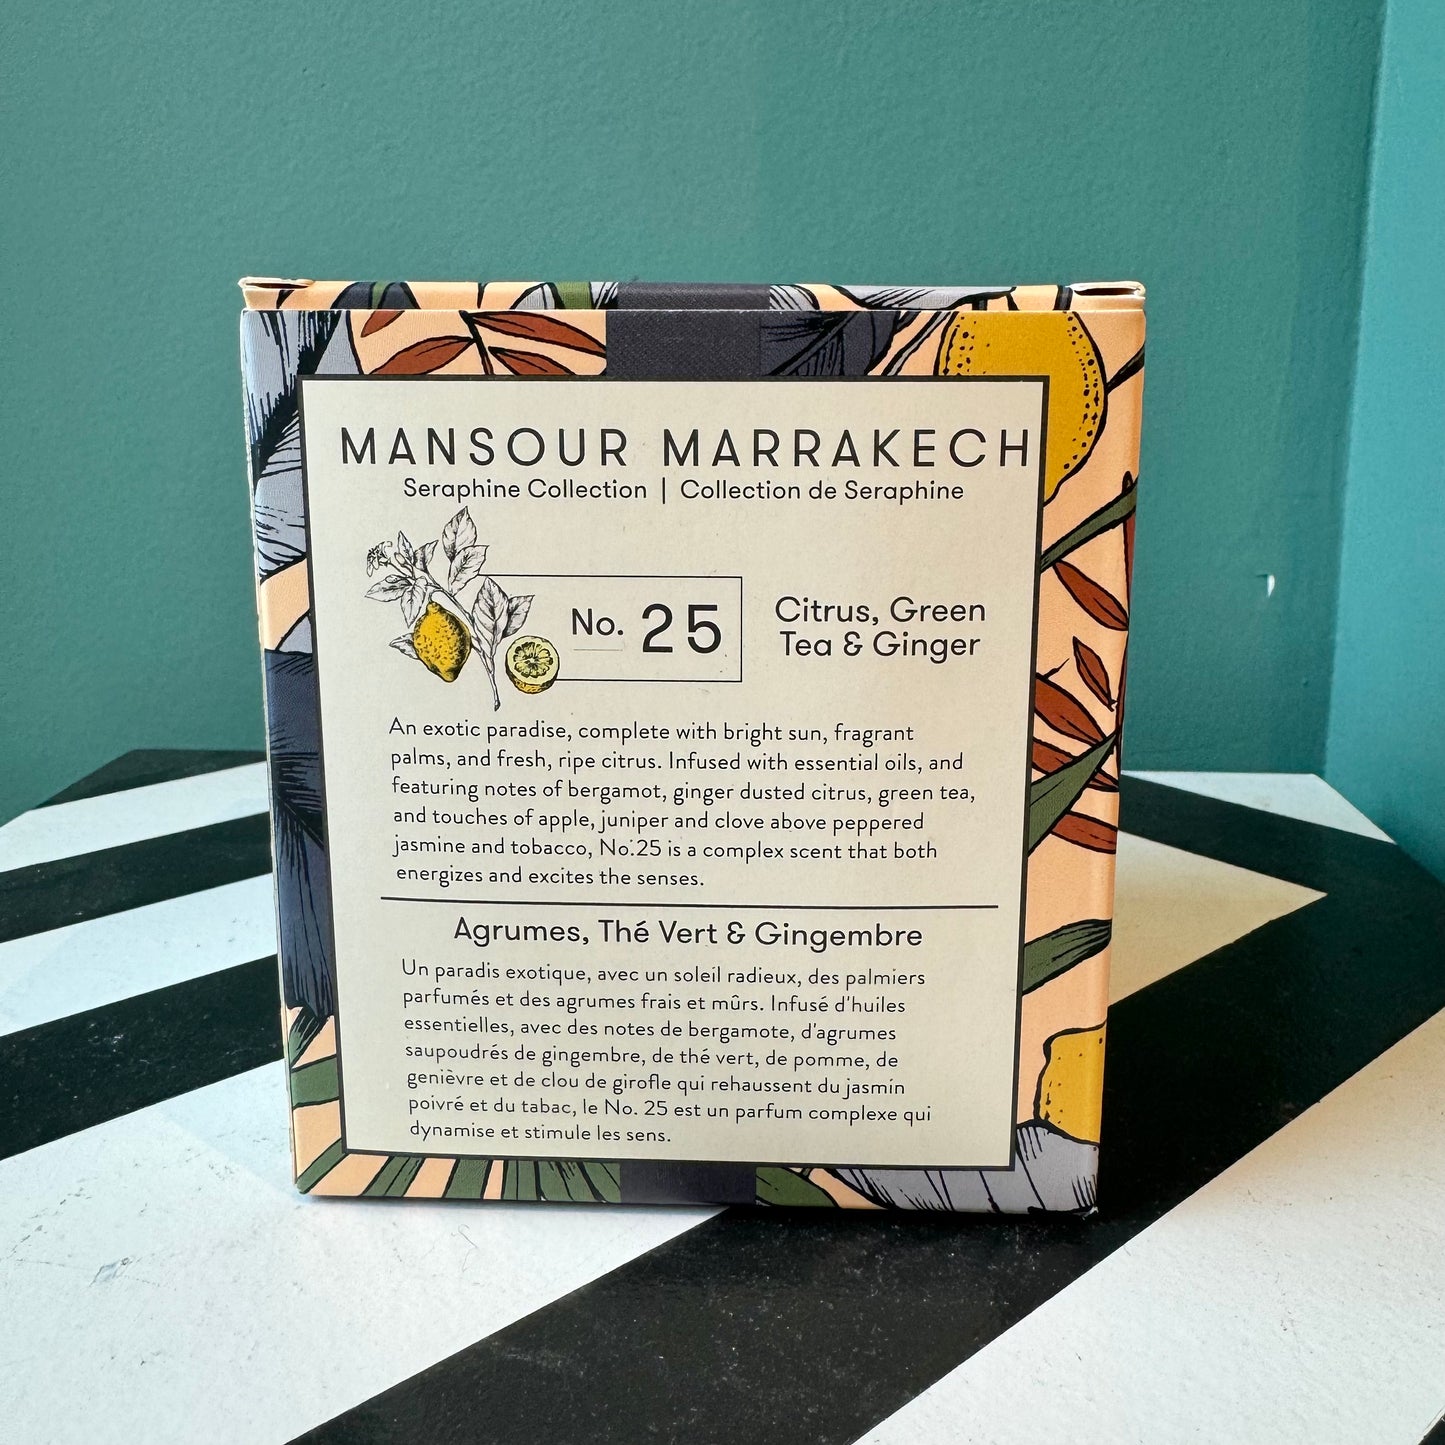 Mansour Marrakech Medium Ceramic Jar Candle by L'Or De Seraphine